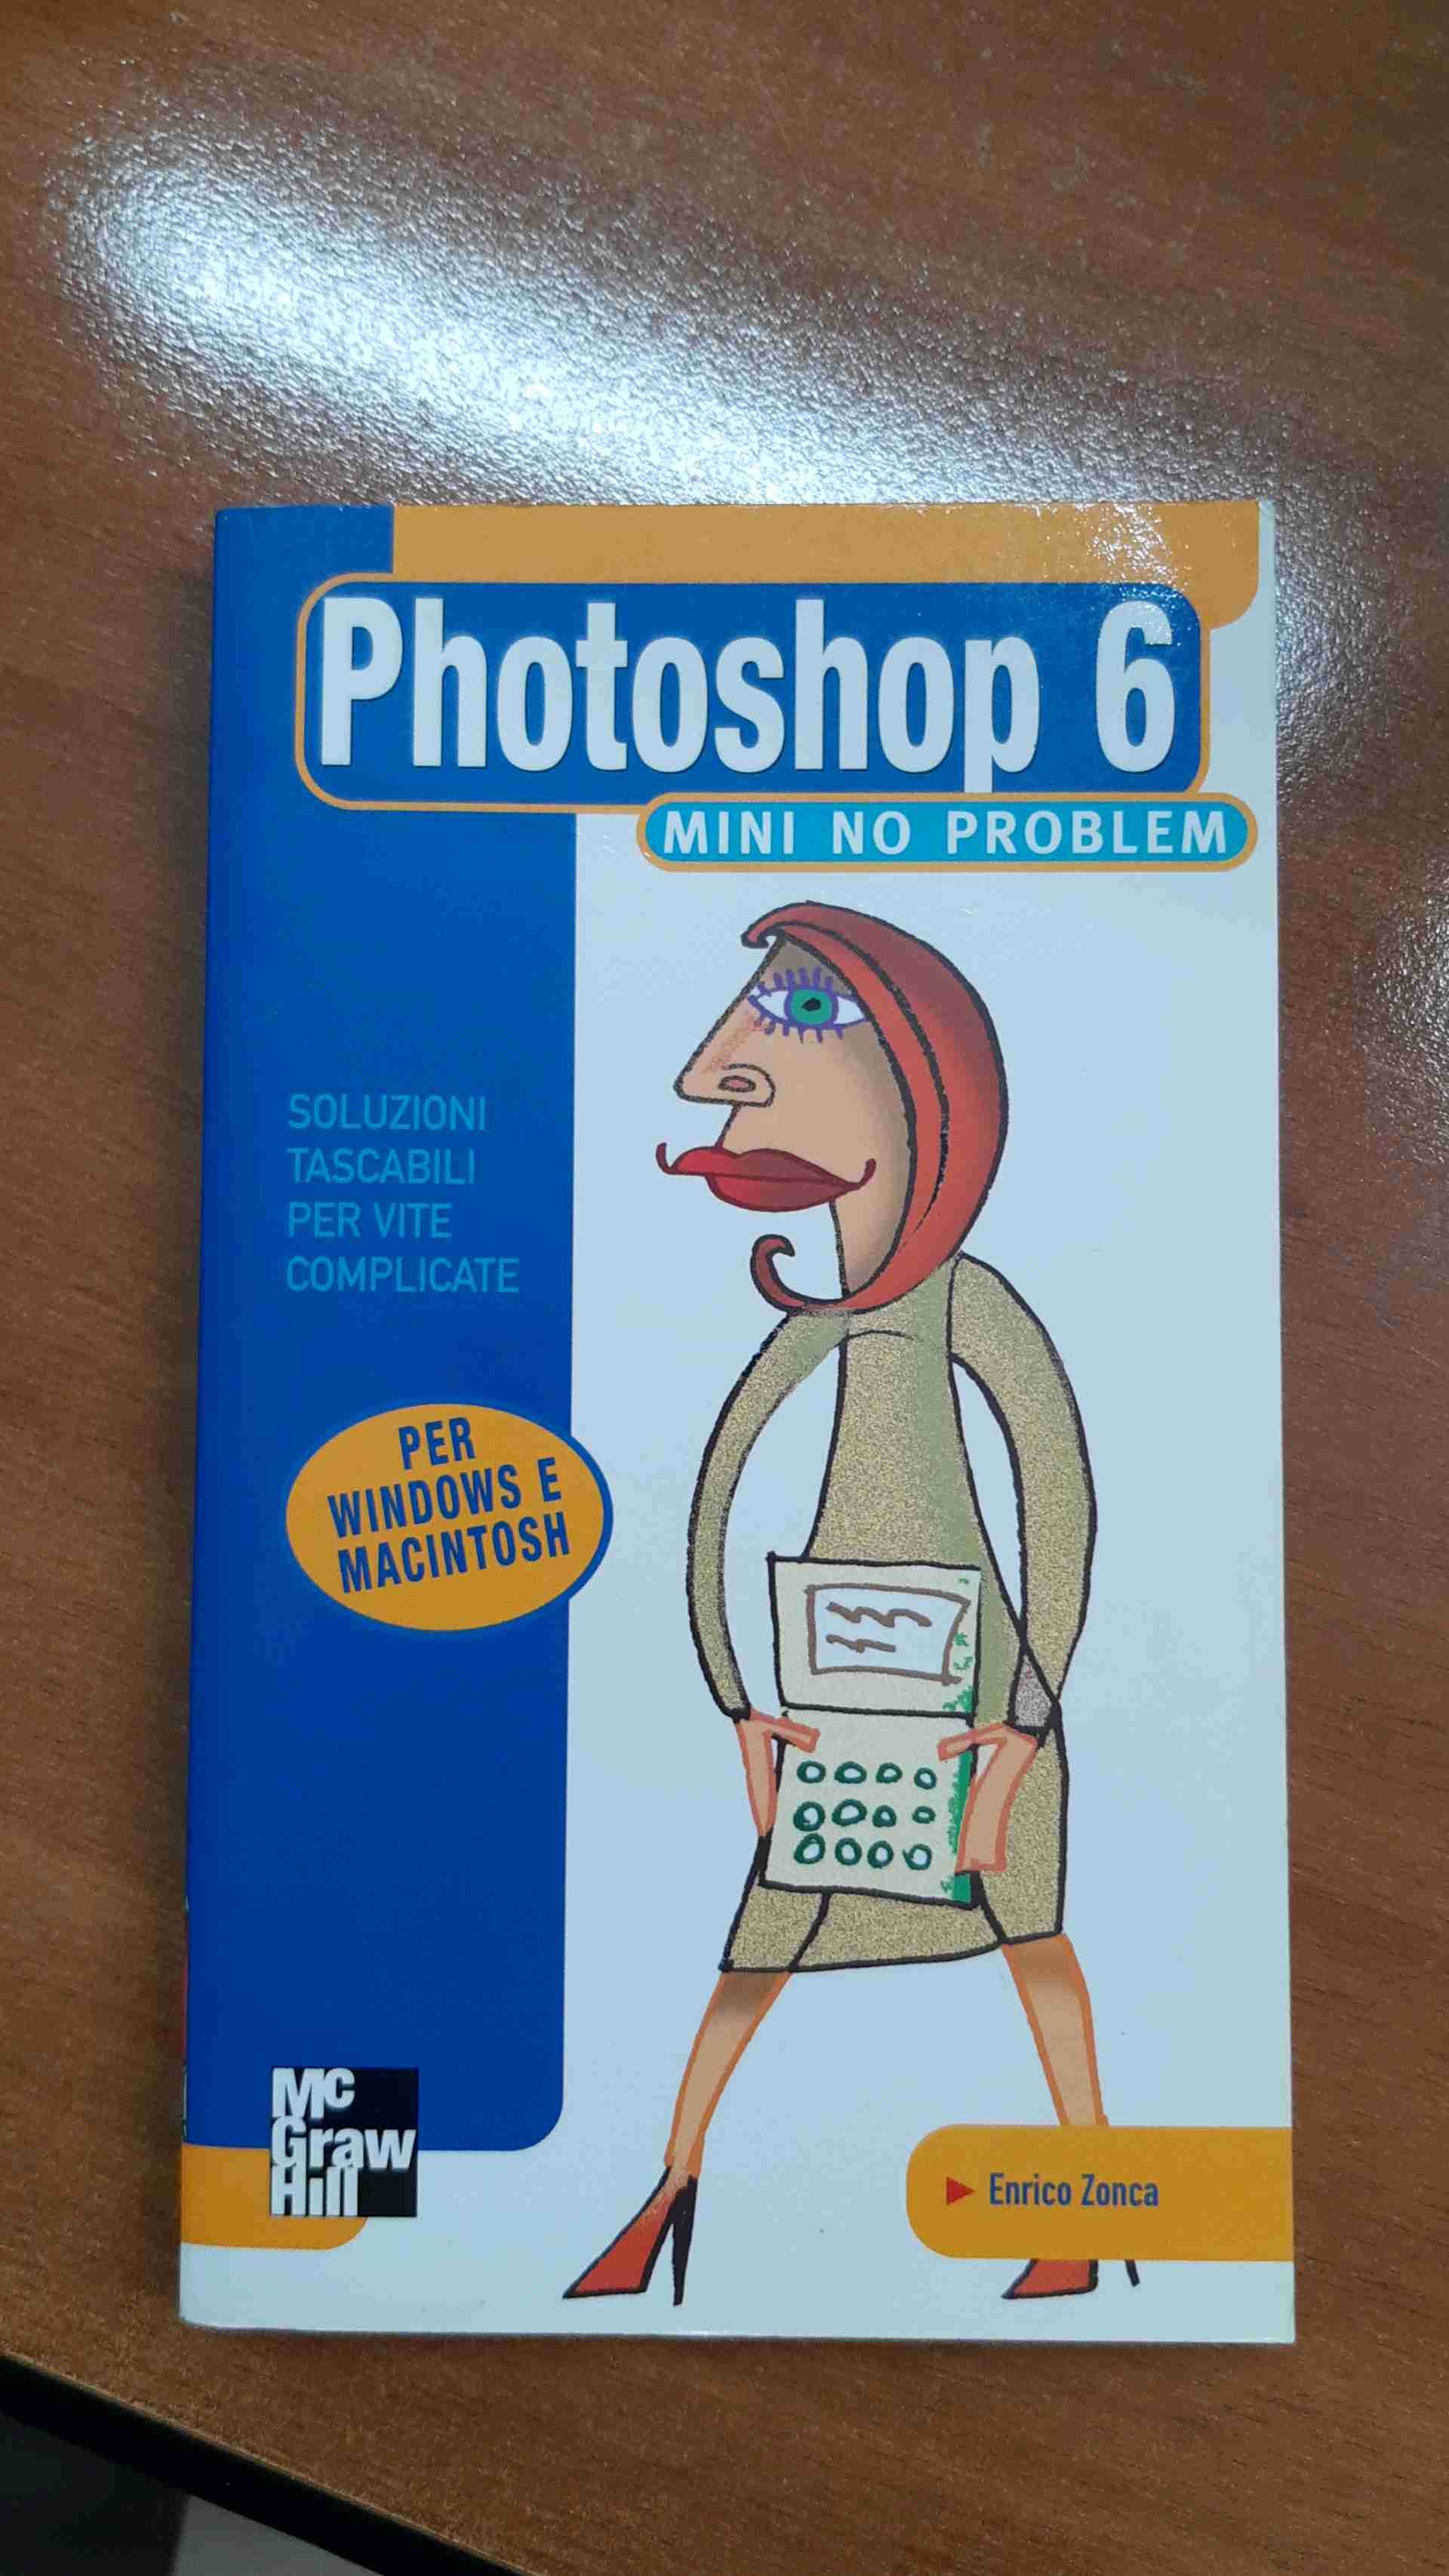 Photoshop 6 mini no problem